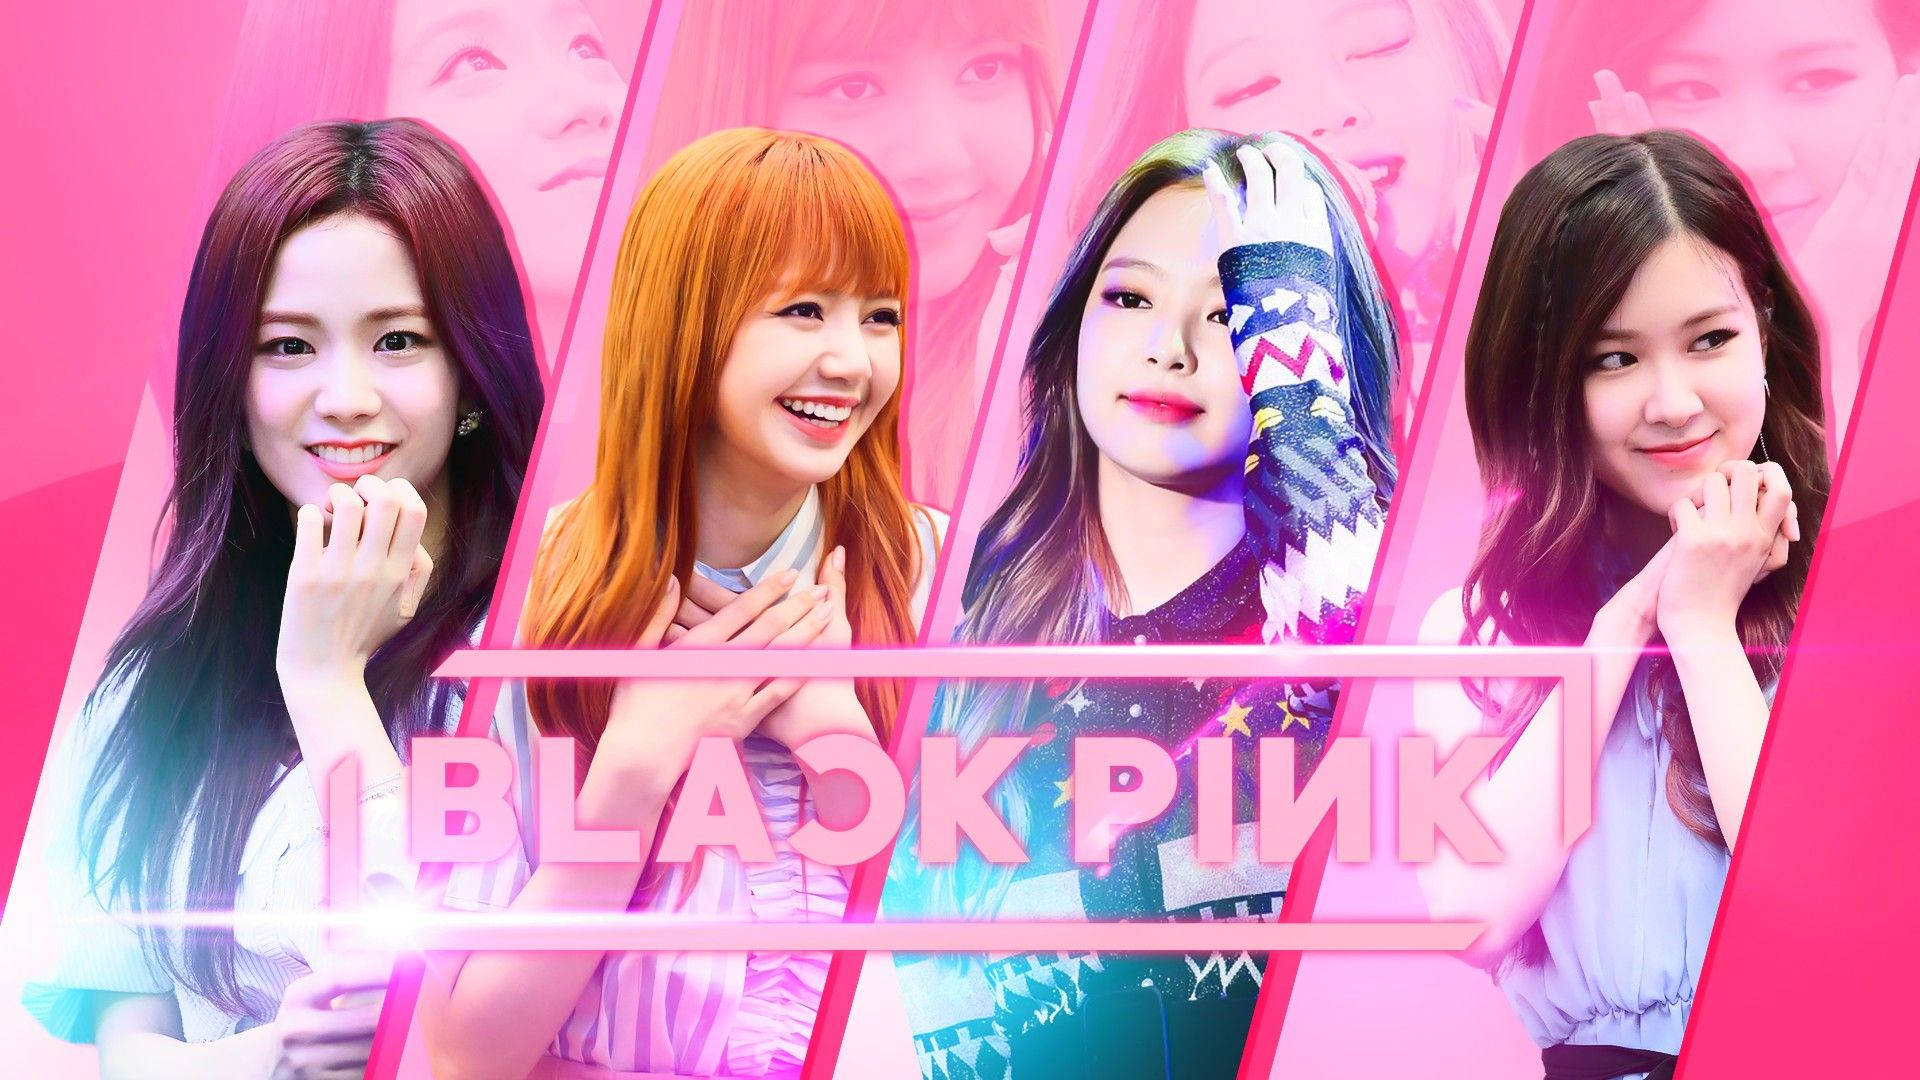 Blackpink Korean Girl Group Background